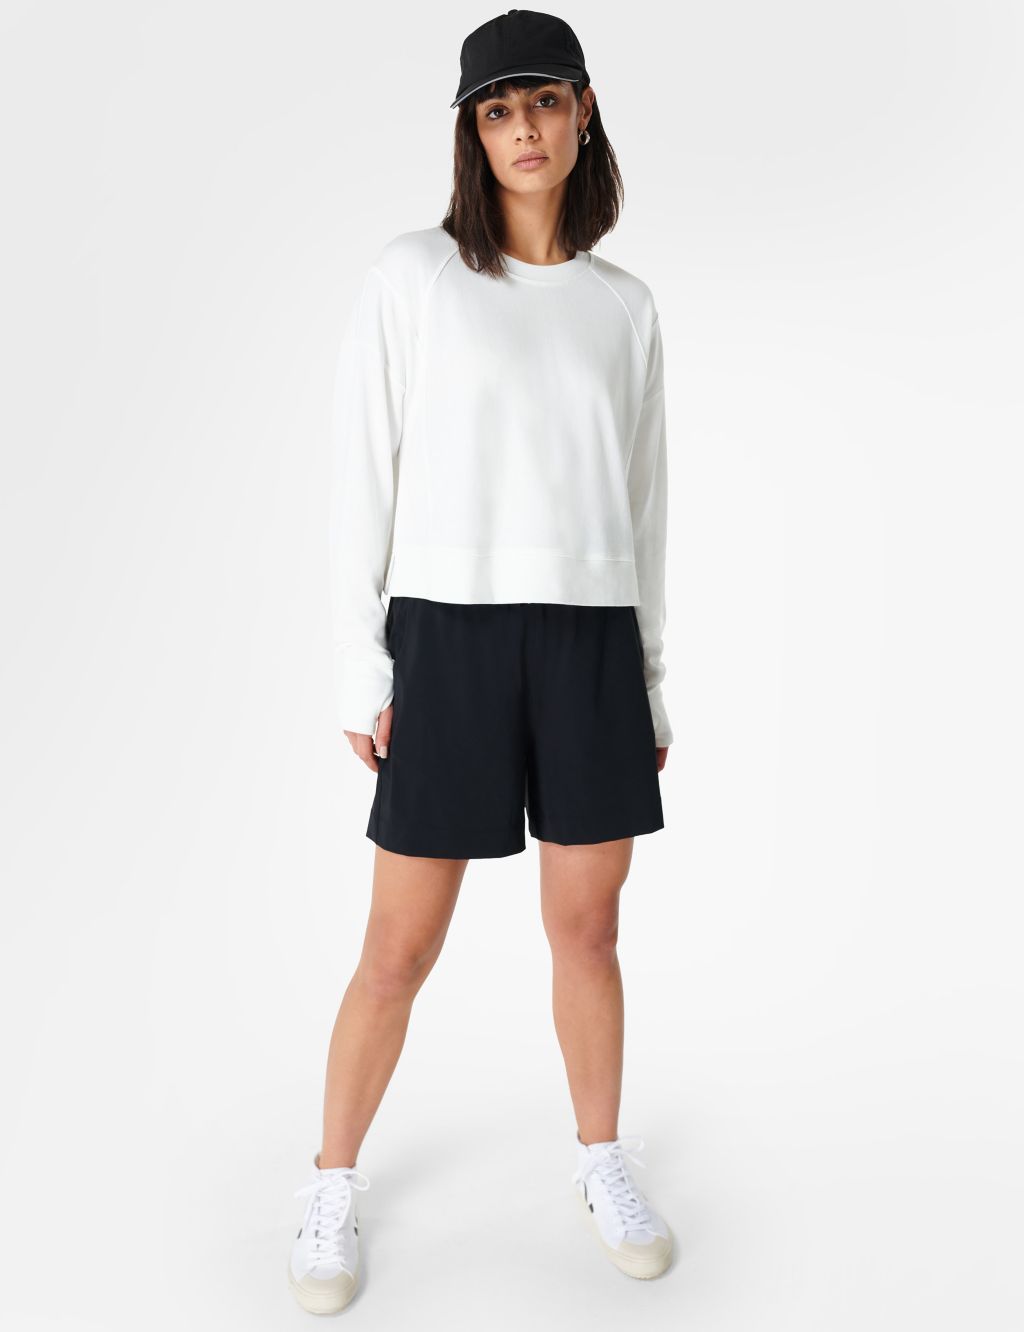 After Class Cotton Blend Relaxed Sweatshirt | Sweaty Betty | M&S